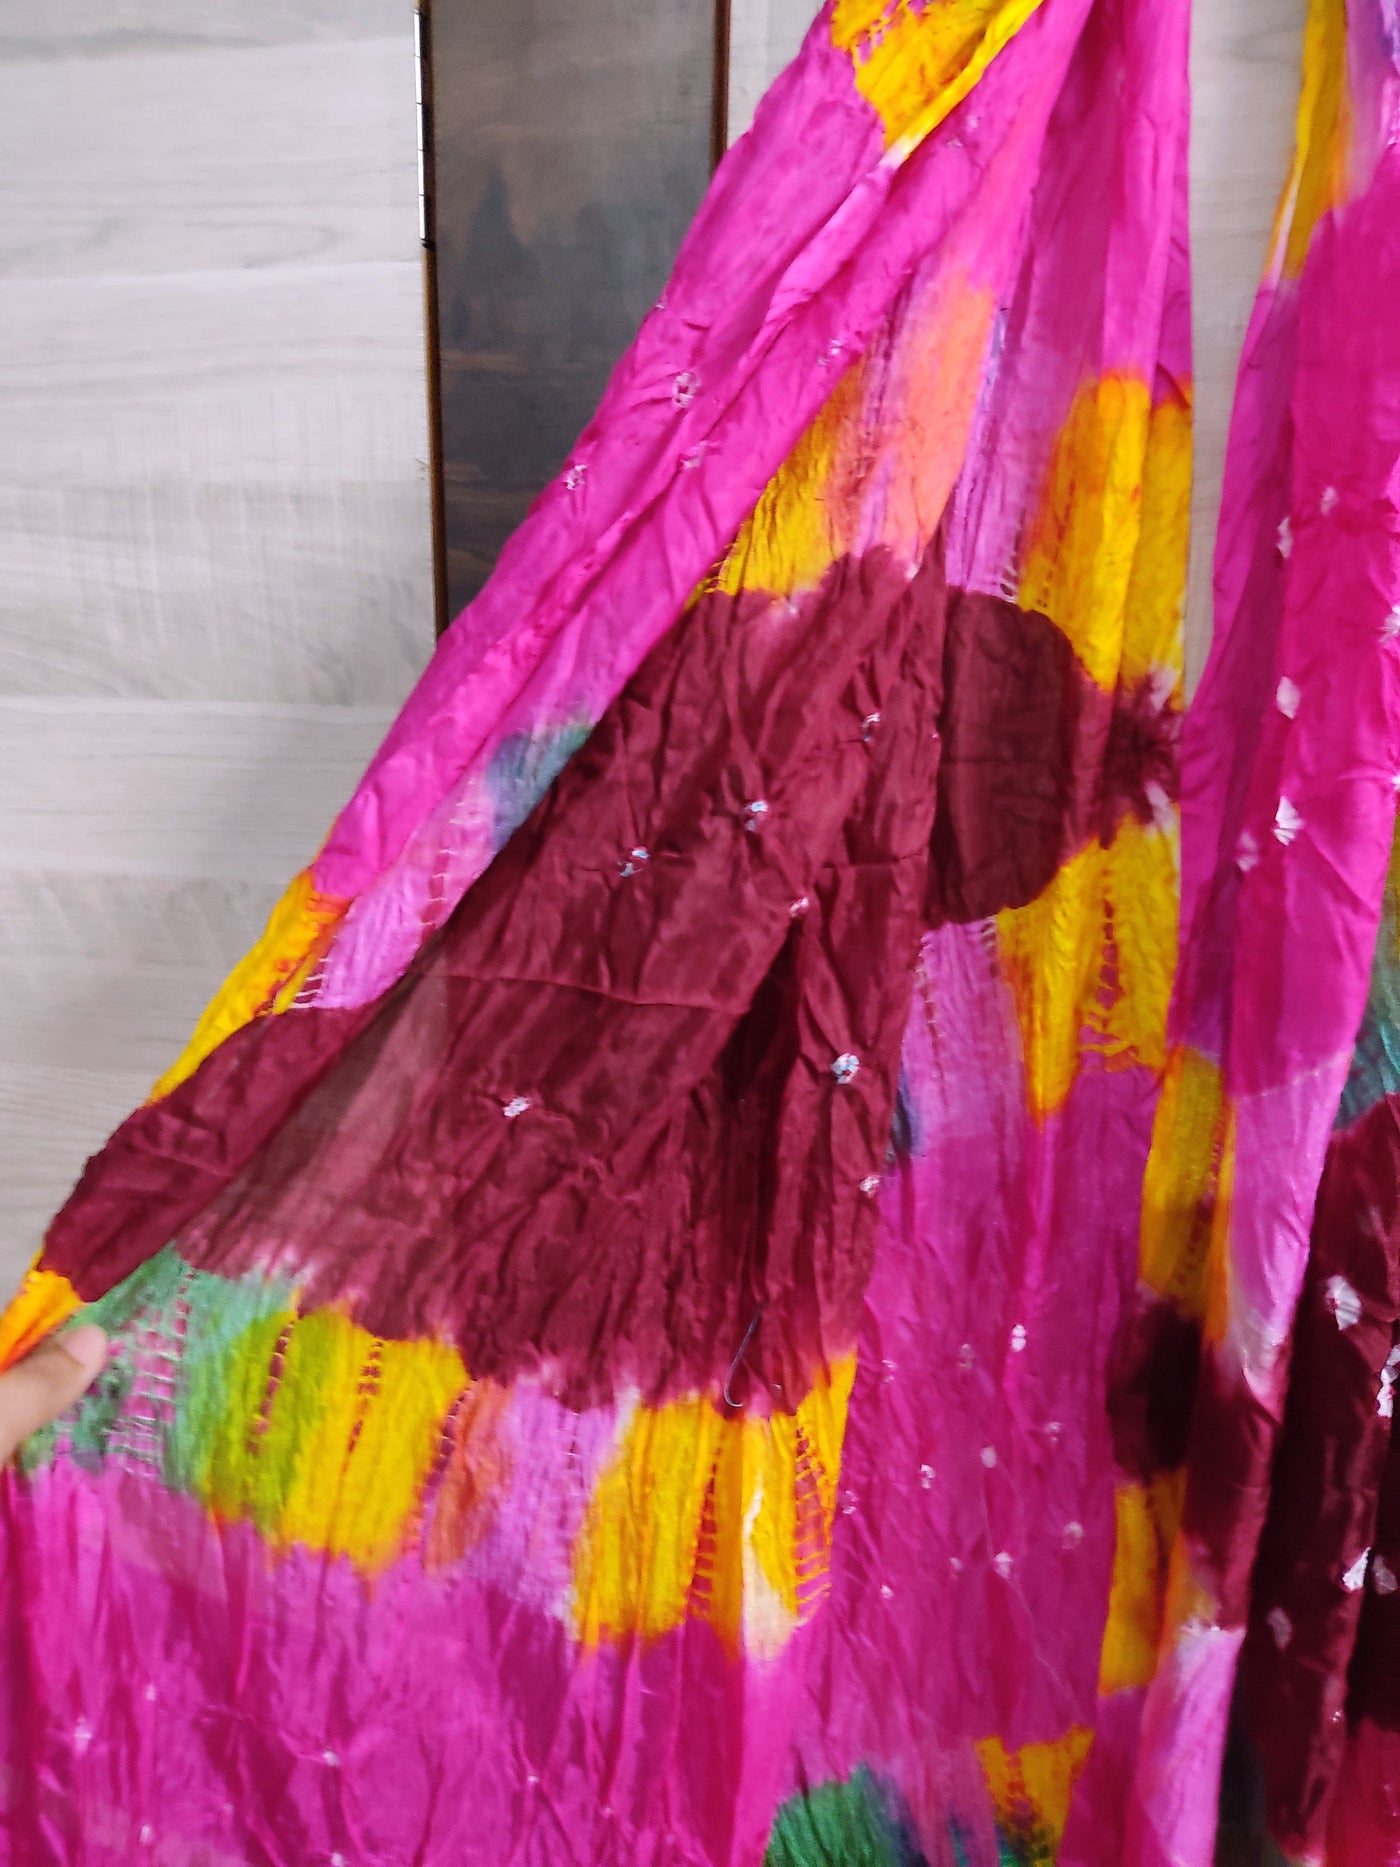 Lamansh dupatta LAMANSH® Silk Nazneen Pachrangi Printed Dupatta's (2 metre) in Assorted colors / Return Gifts 🎁 & Favors for bridesmaids or ladies guests in Wedding , or Pooja ceremony